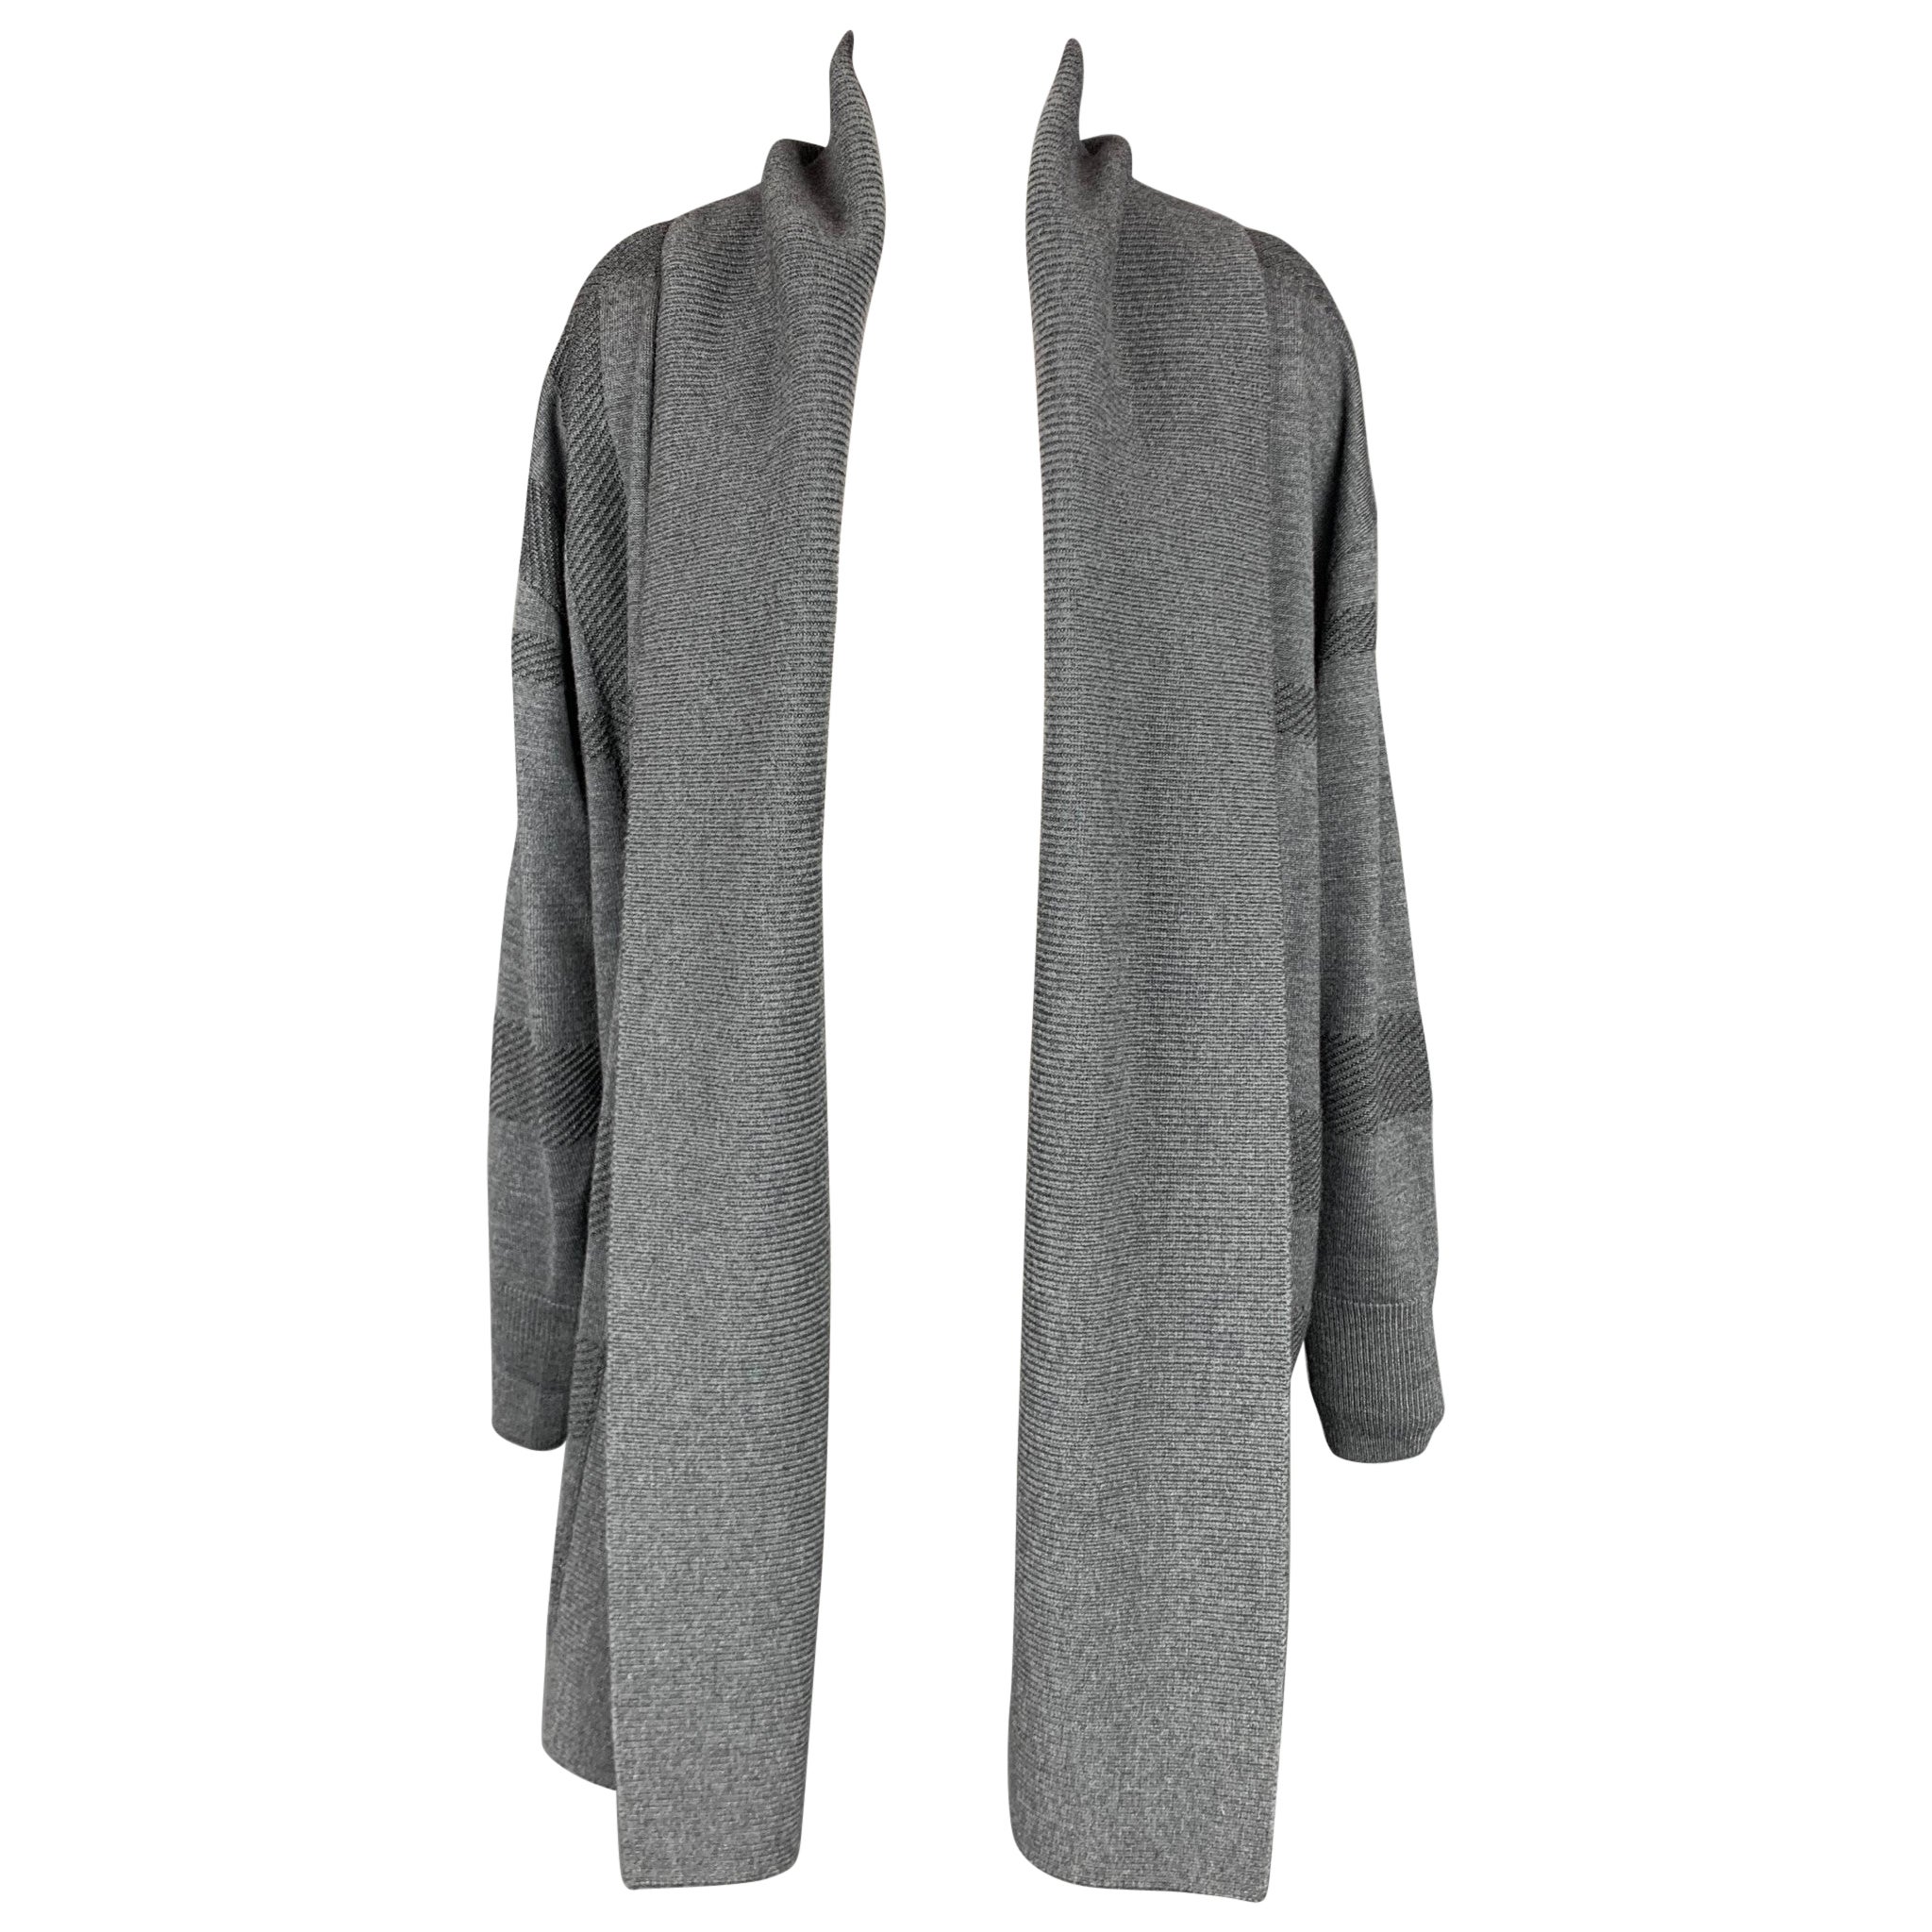 BURBERRY LONDON Olona Size S Grey & Charcoal Merino Wool Cardigan